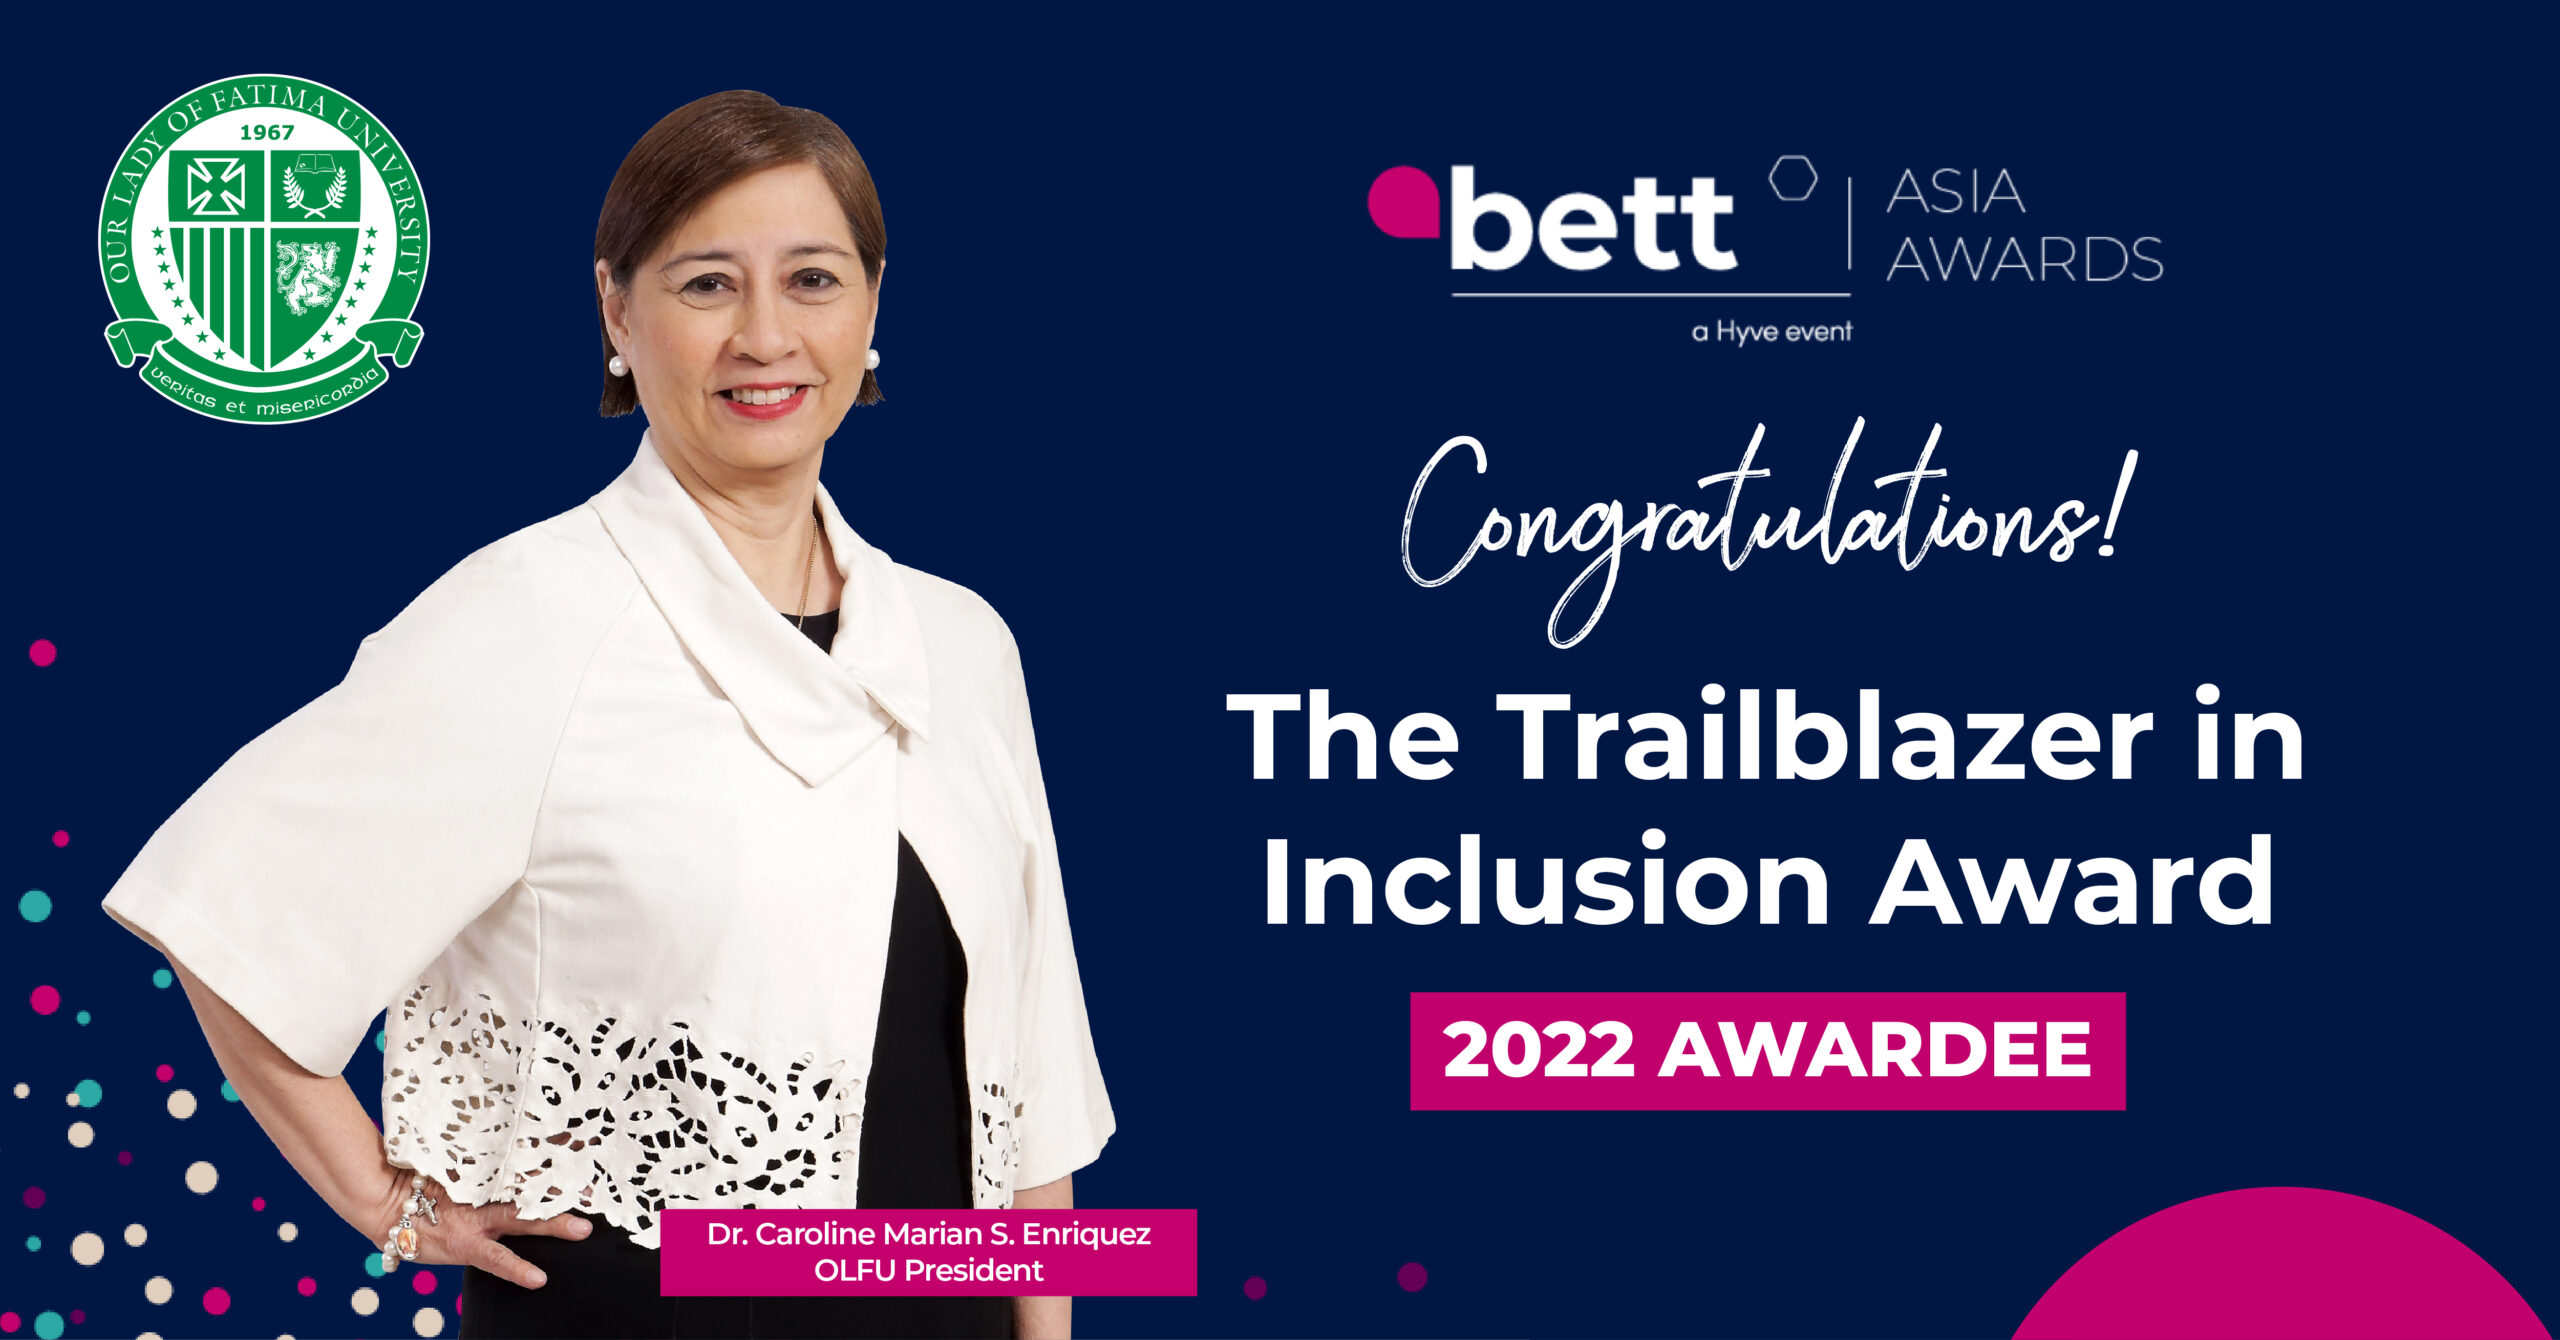 Bett Asia Awards hails OLFU President Enriquez as International Trailblazer